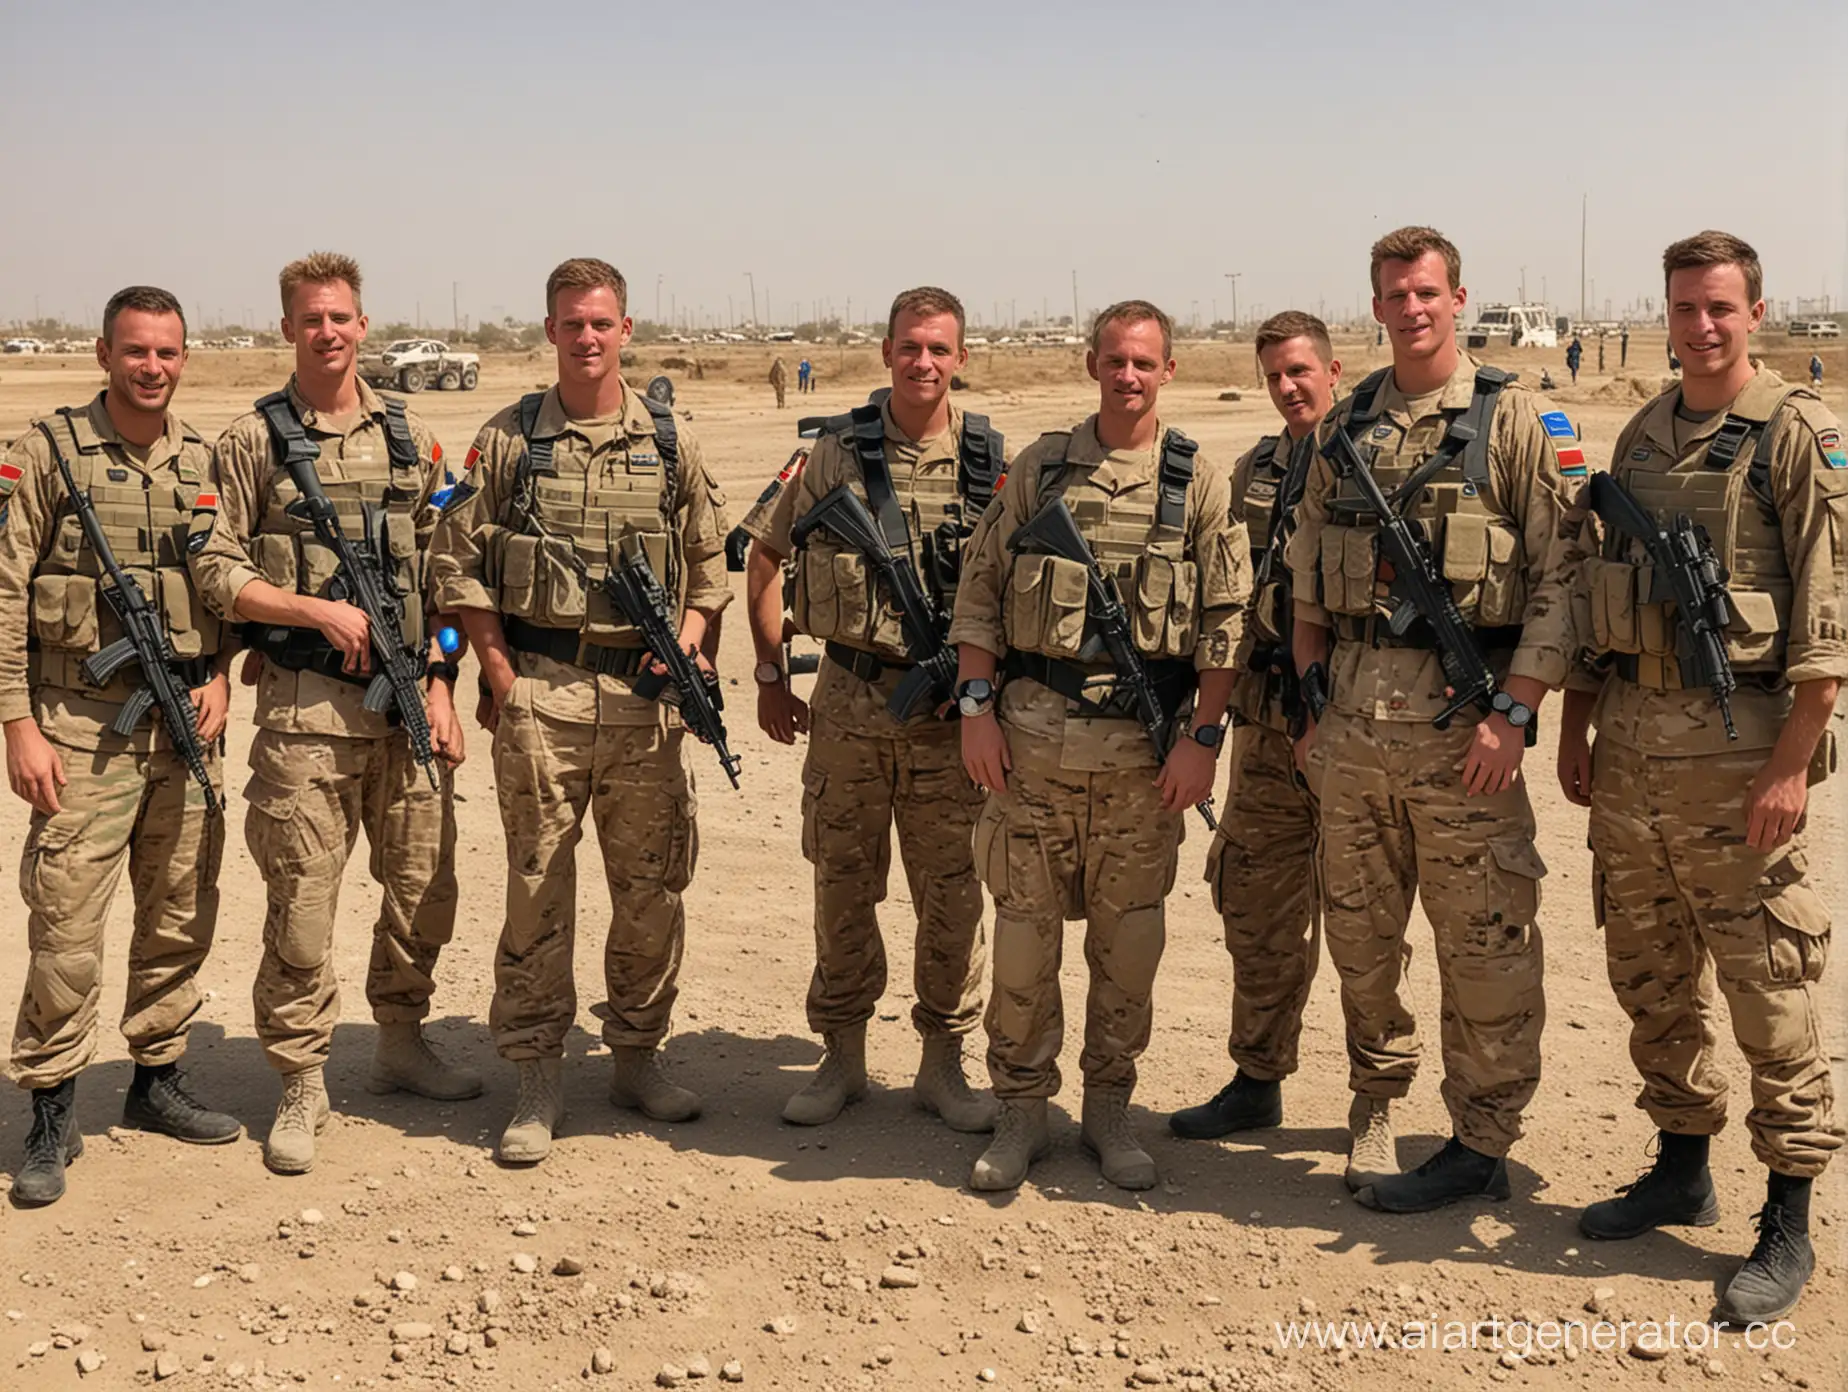 The Dutch contingent in Iraq